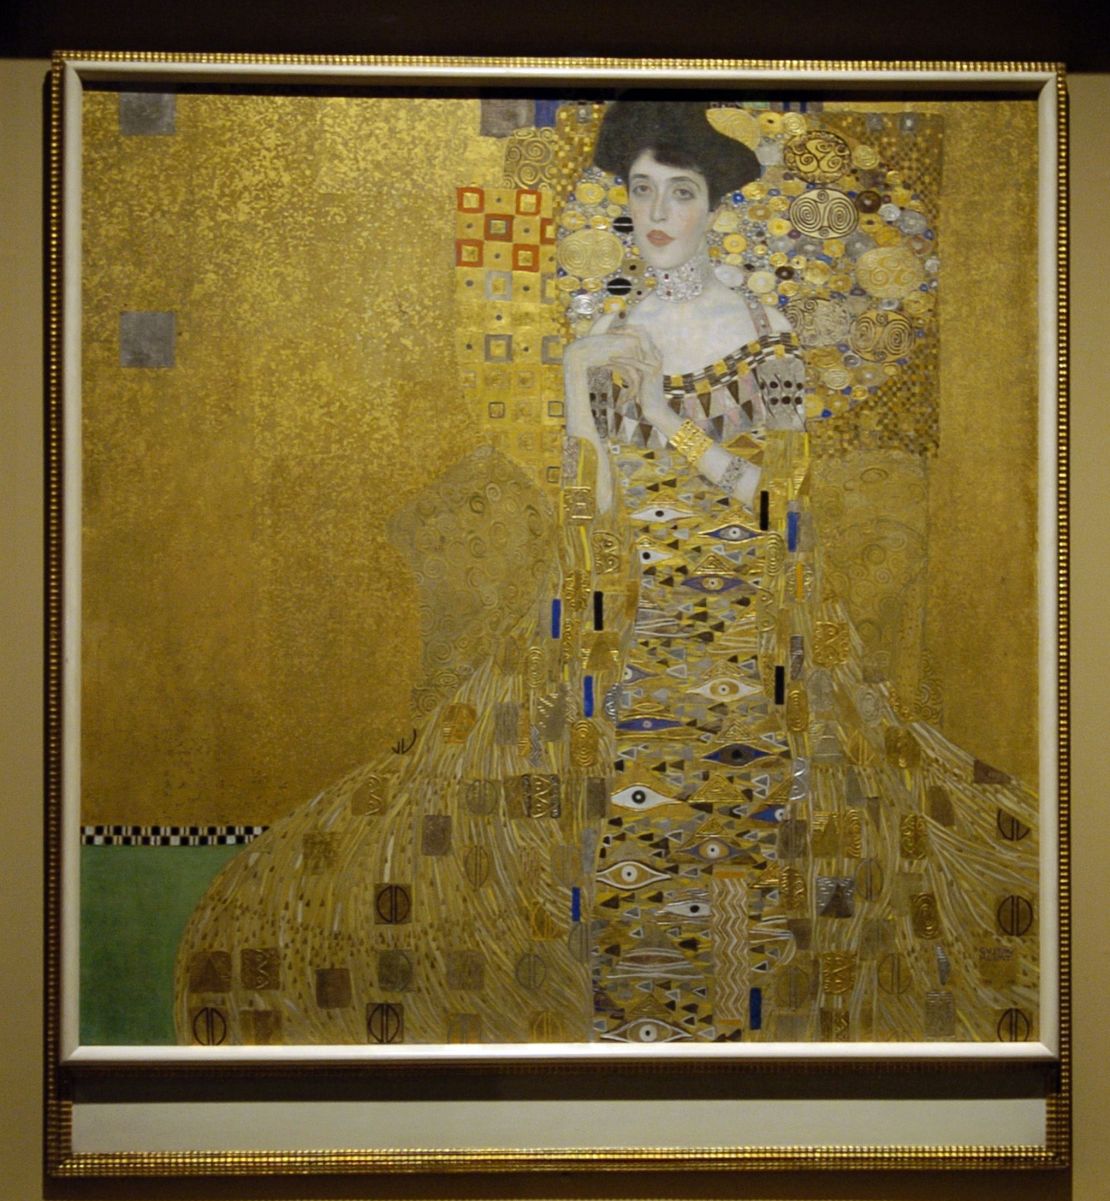 Gustav Klimt's "Adele Bloch-Bauer I"